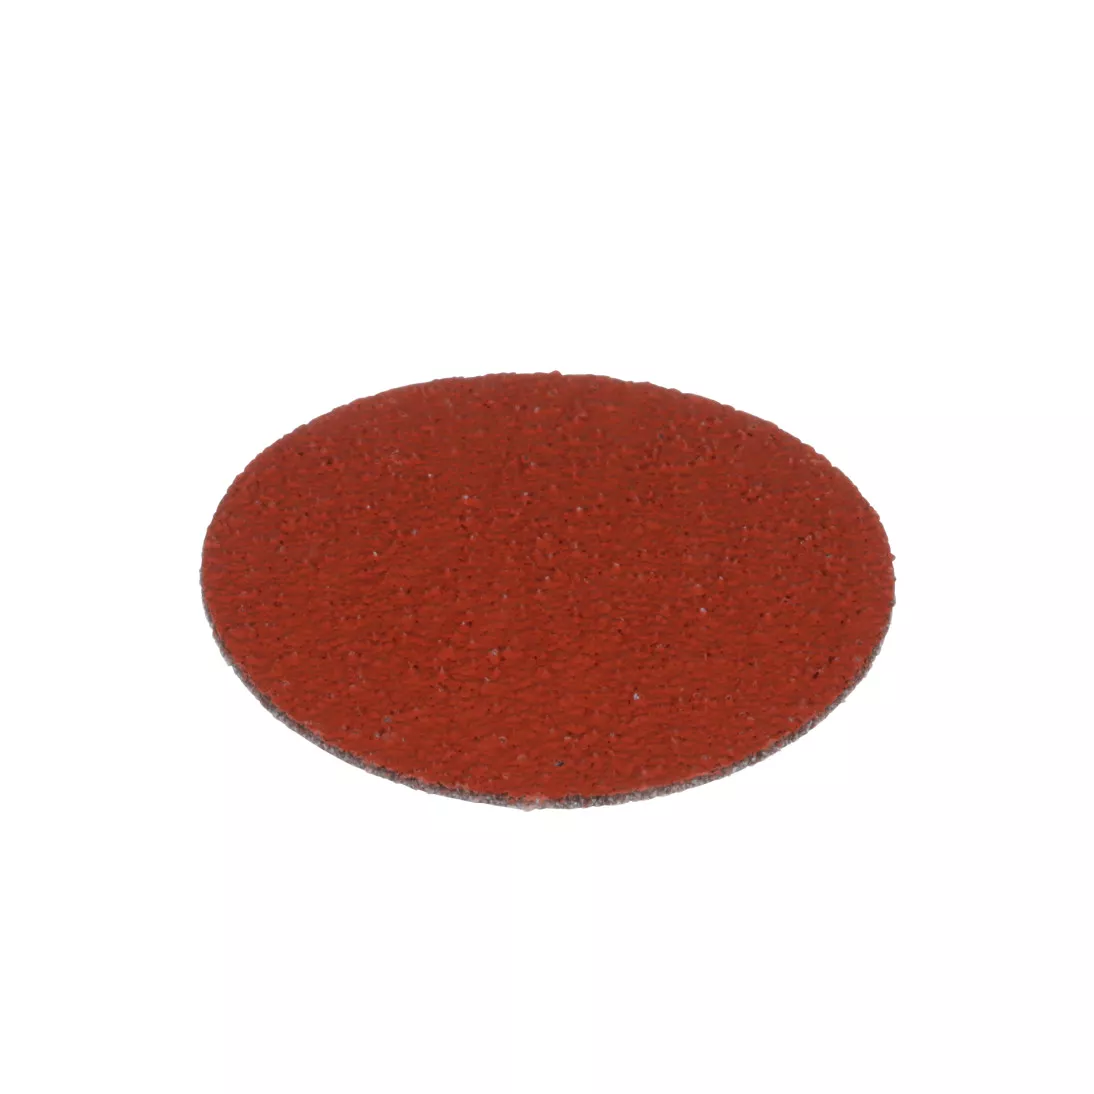 Standard Abrasives™ Quick Change Ceramic 2 Ply Disc, 595415, 60, TR,
Red, 2 in, Die Q200P, 50/inner, 200/case